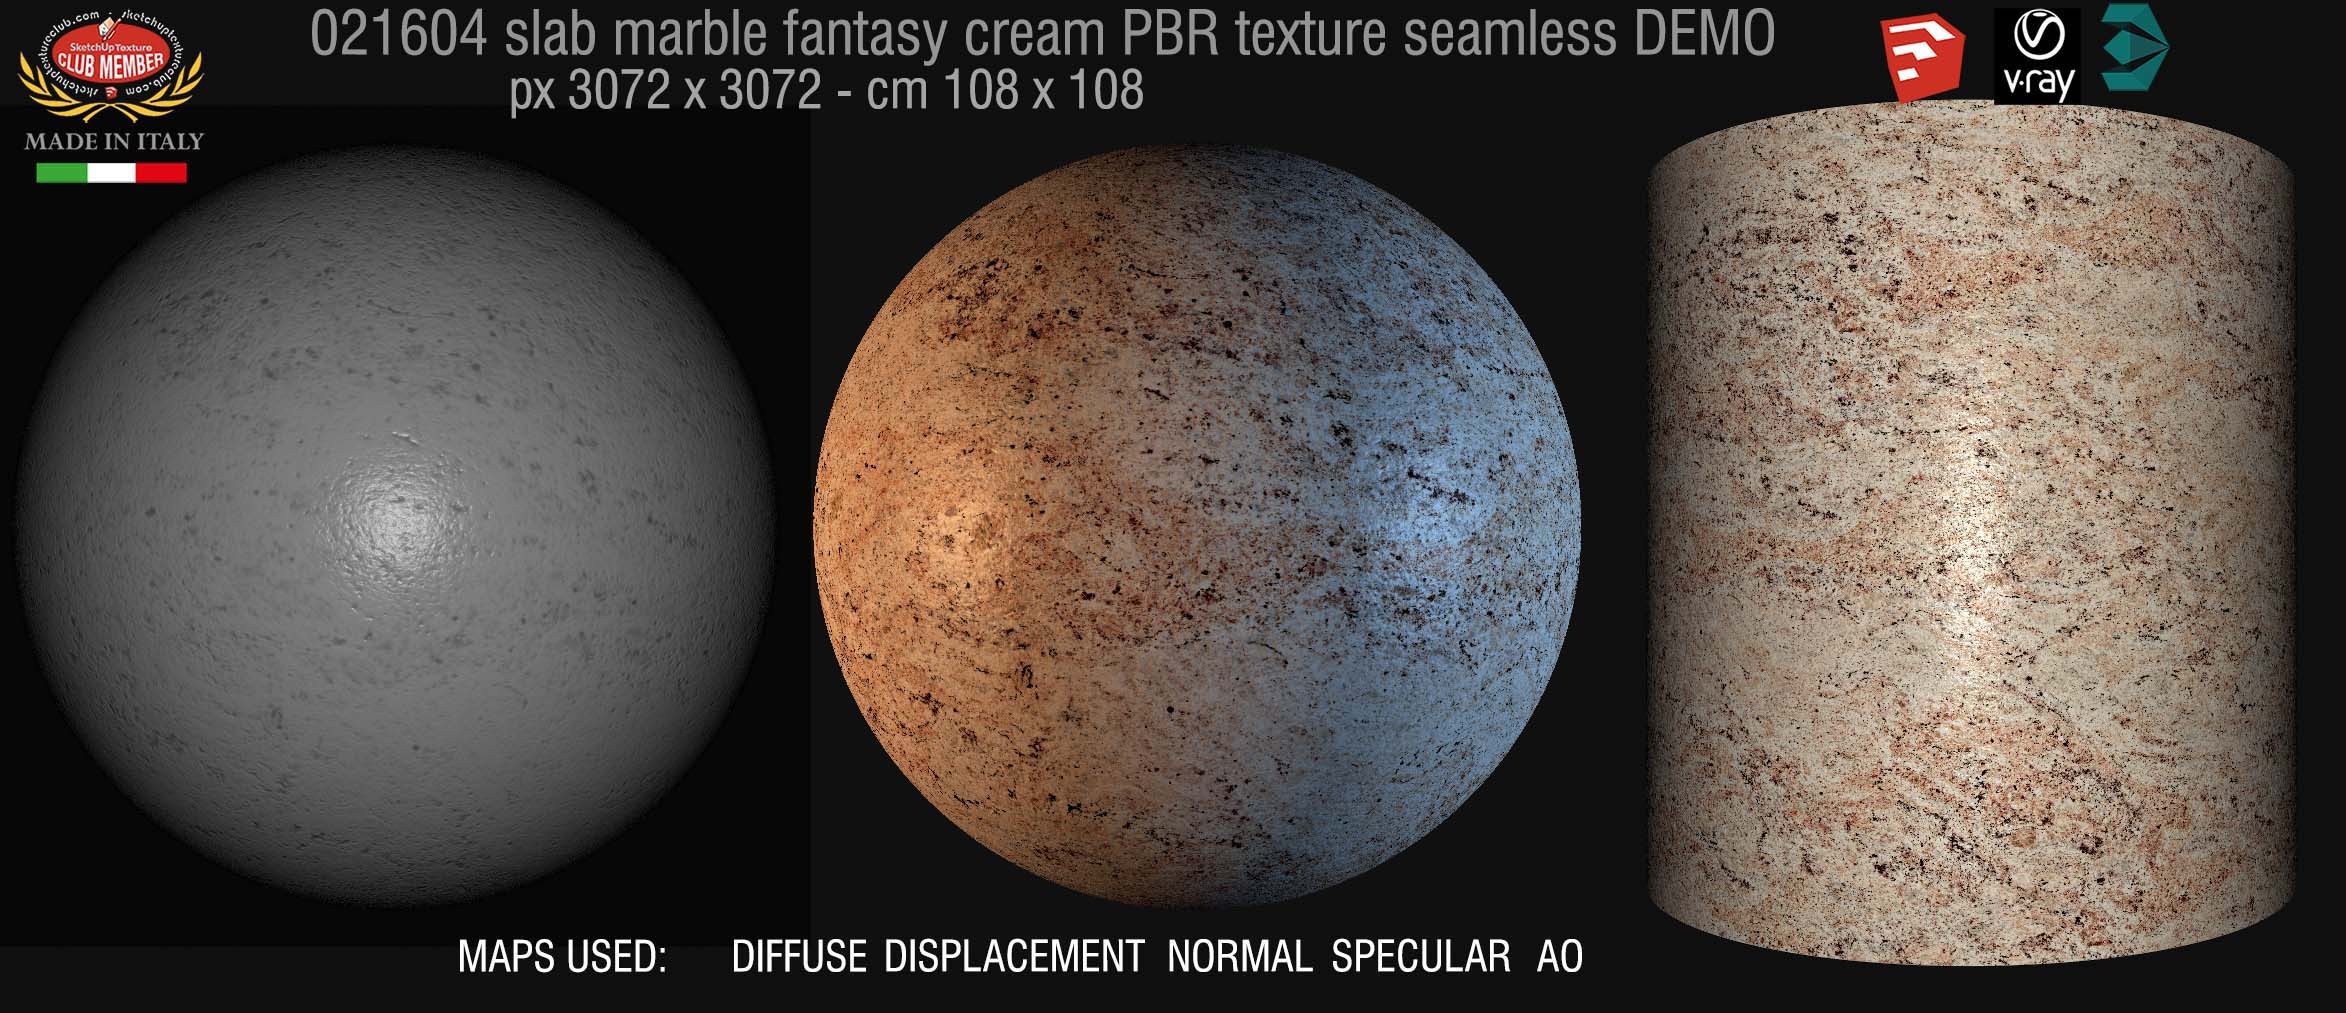 21604 fantasy cream slab marble PBR texture seamless DEMO